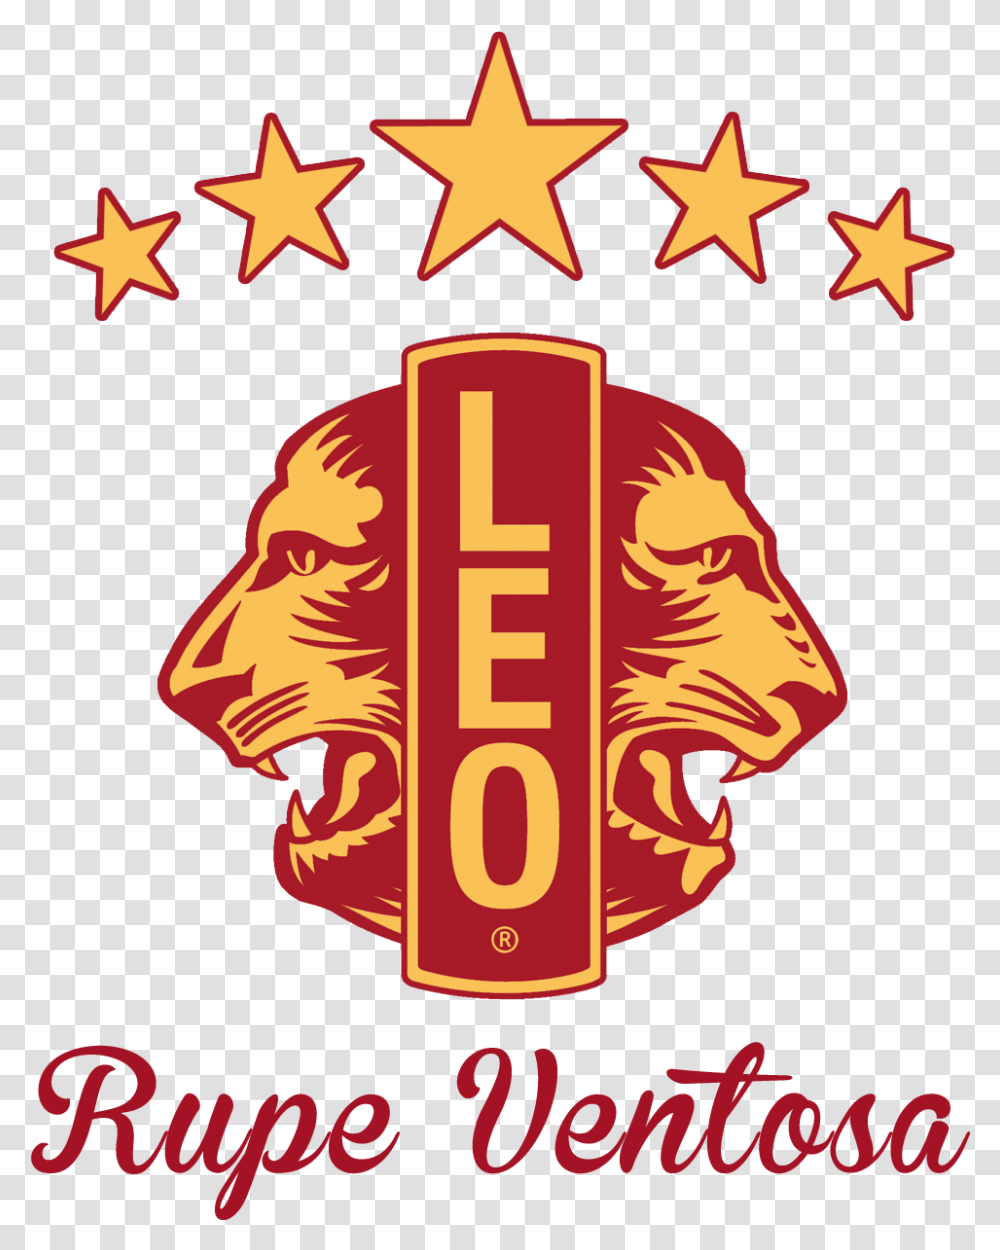 Leo Clubs Association Lions Clubs International Service Lions Club International Leo Club, Poster, Advertisement Transparent Png